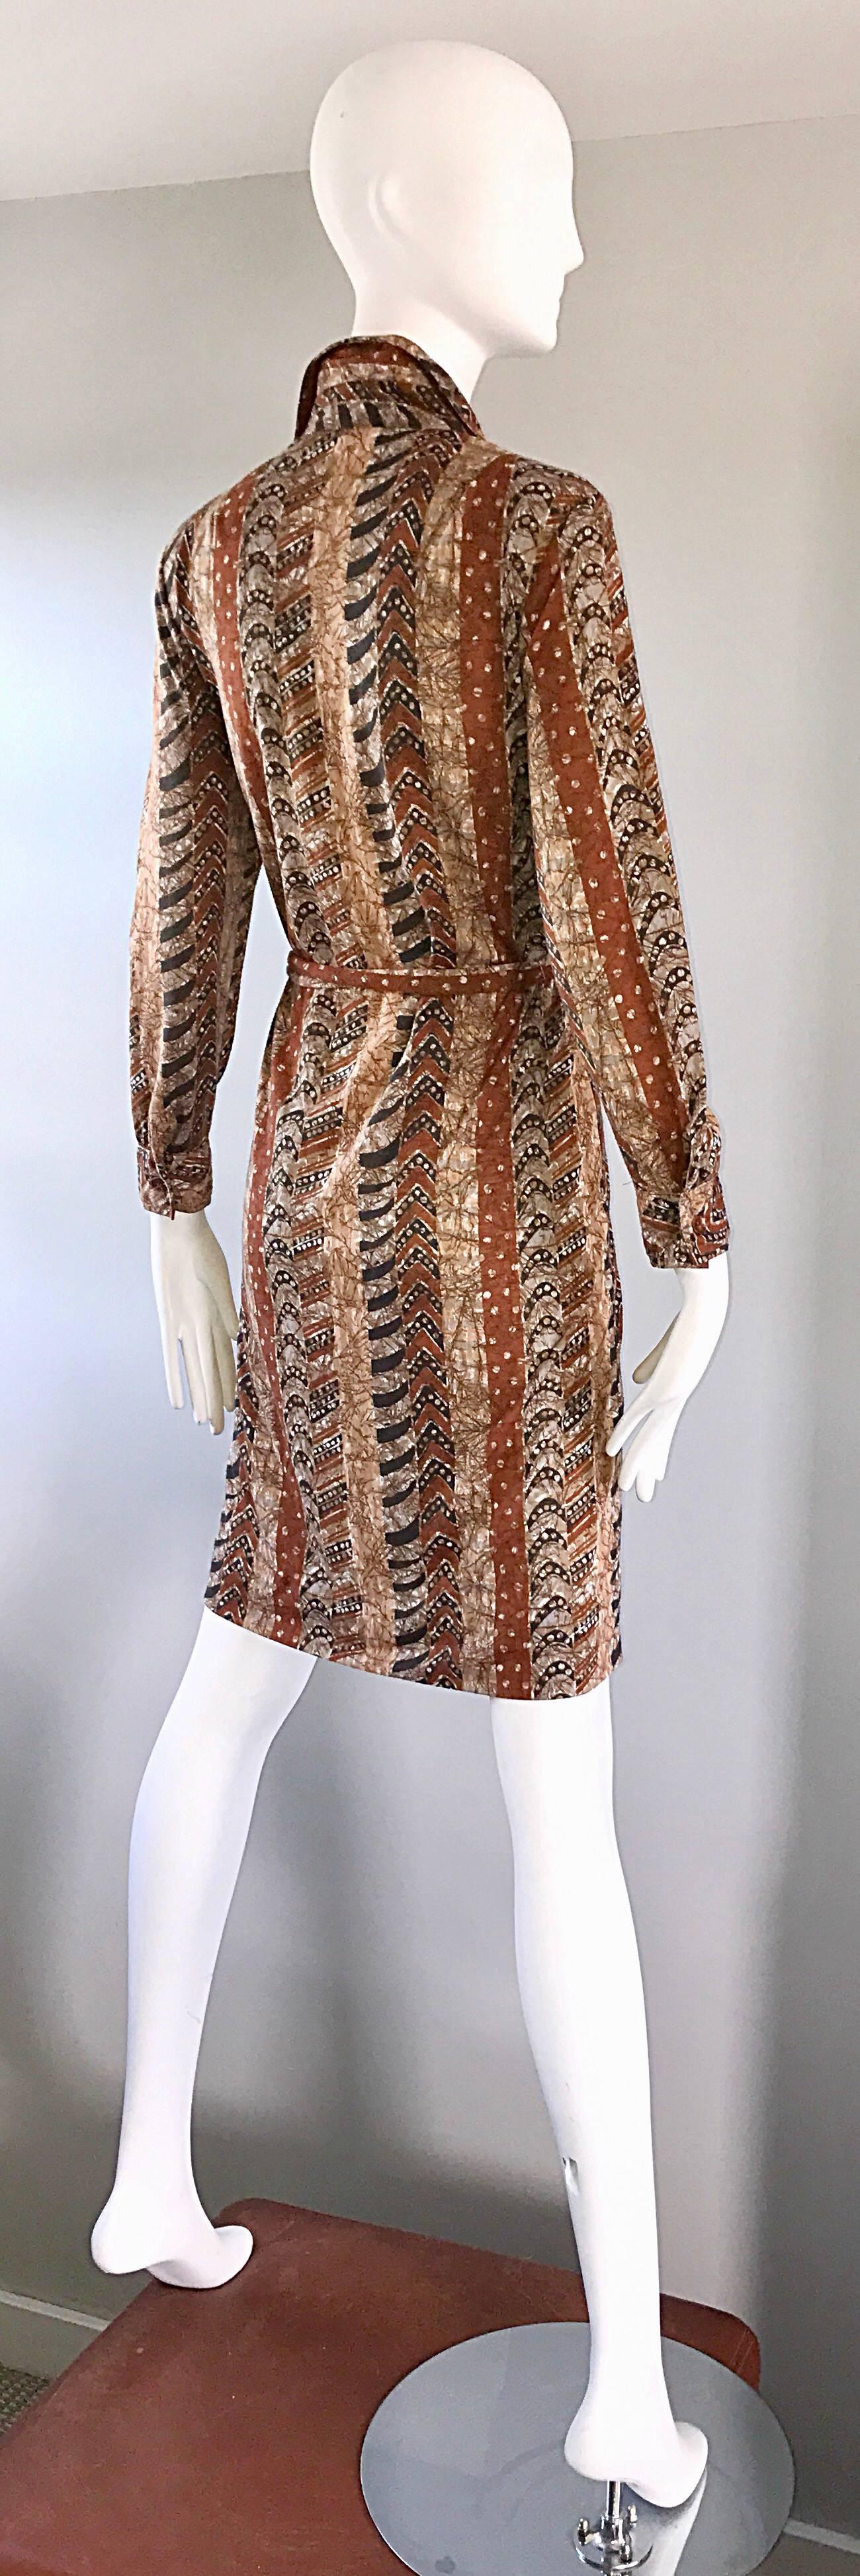 Bonwit Teller 1970s Batik Print Belted Cotton 70s Vintage Brown Safari Dress  For Sale 3